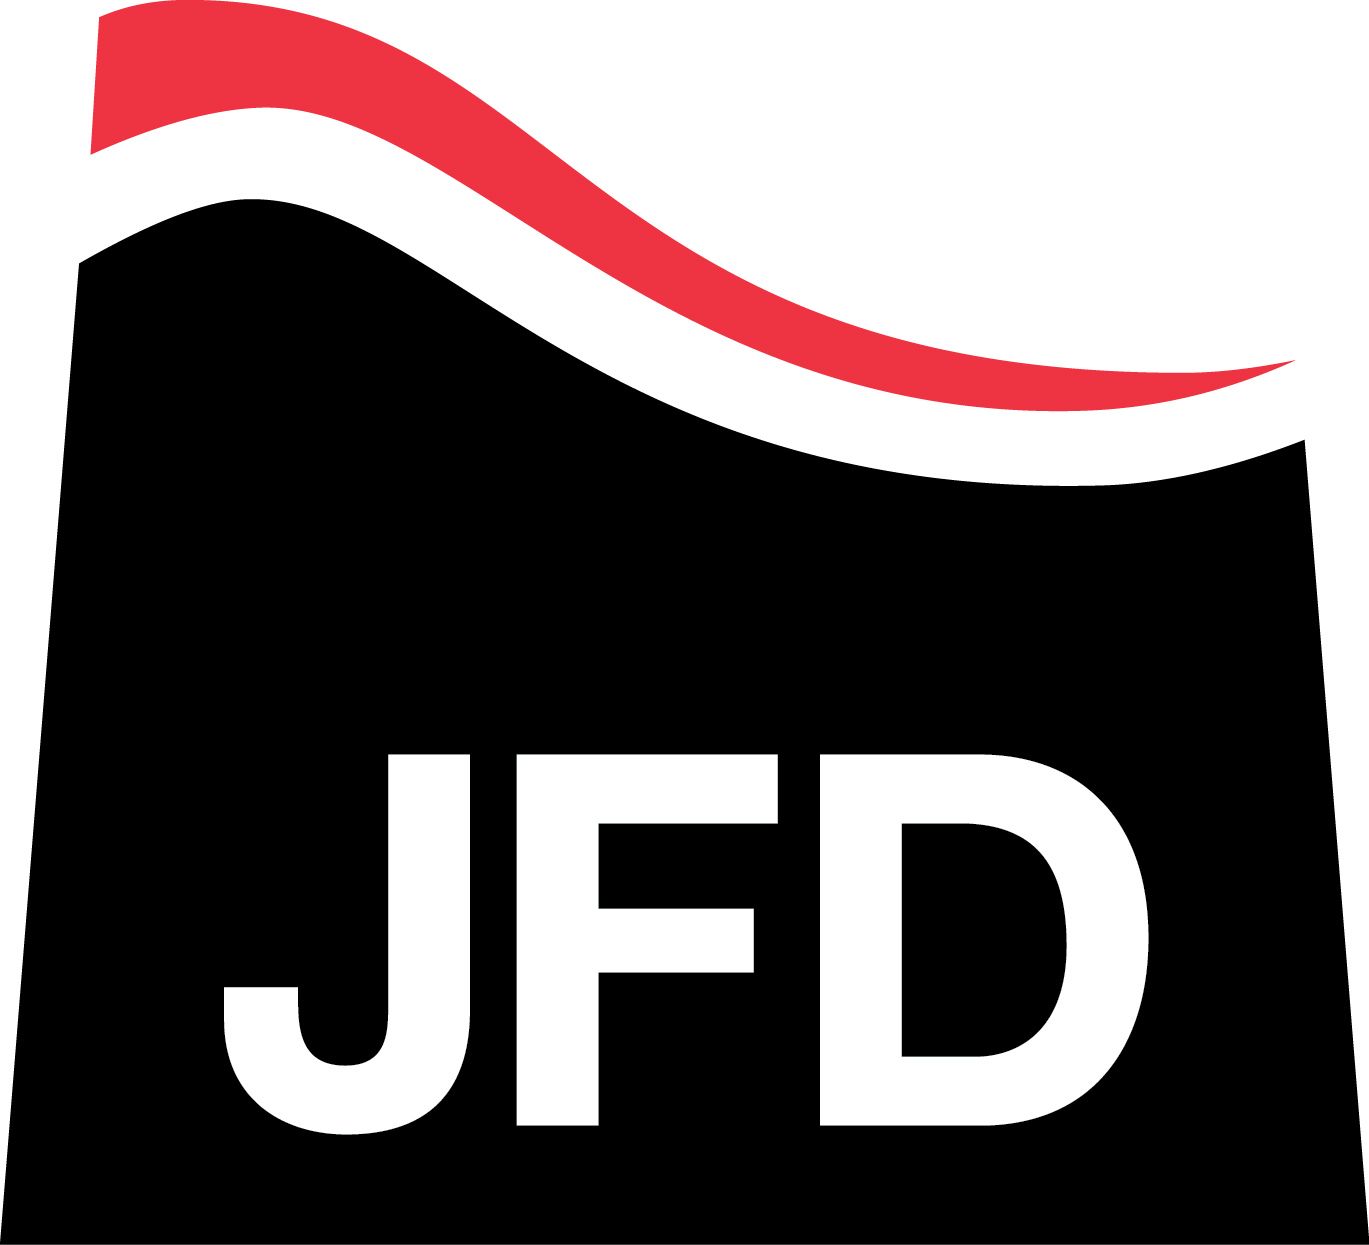 JFD Logo